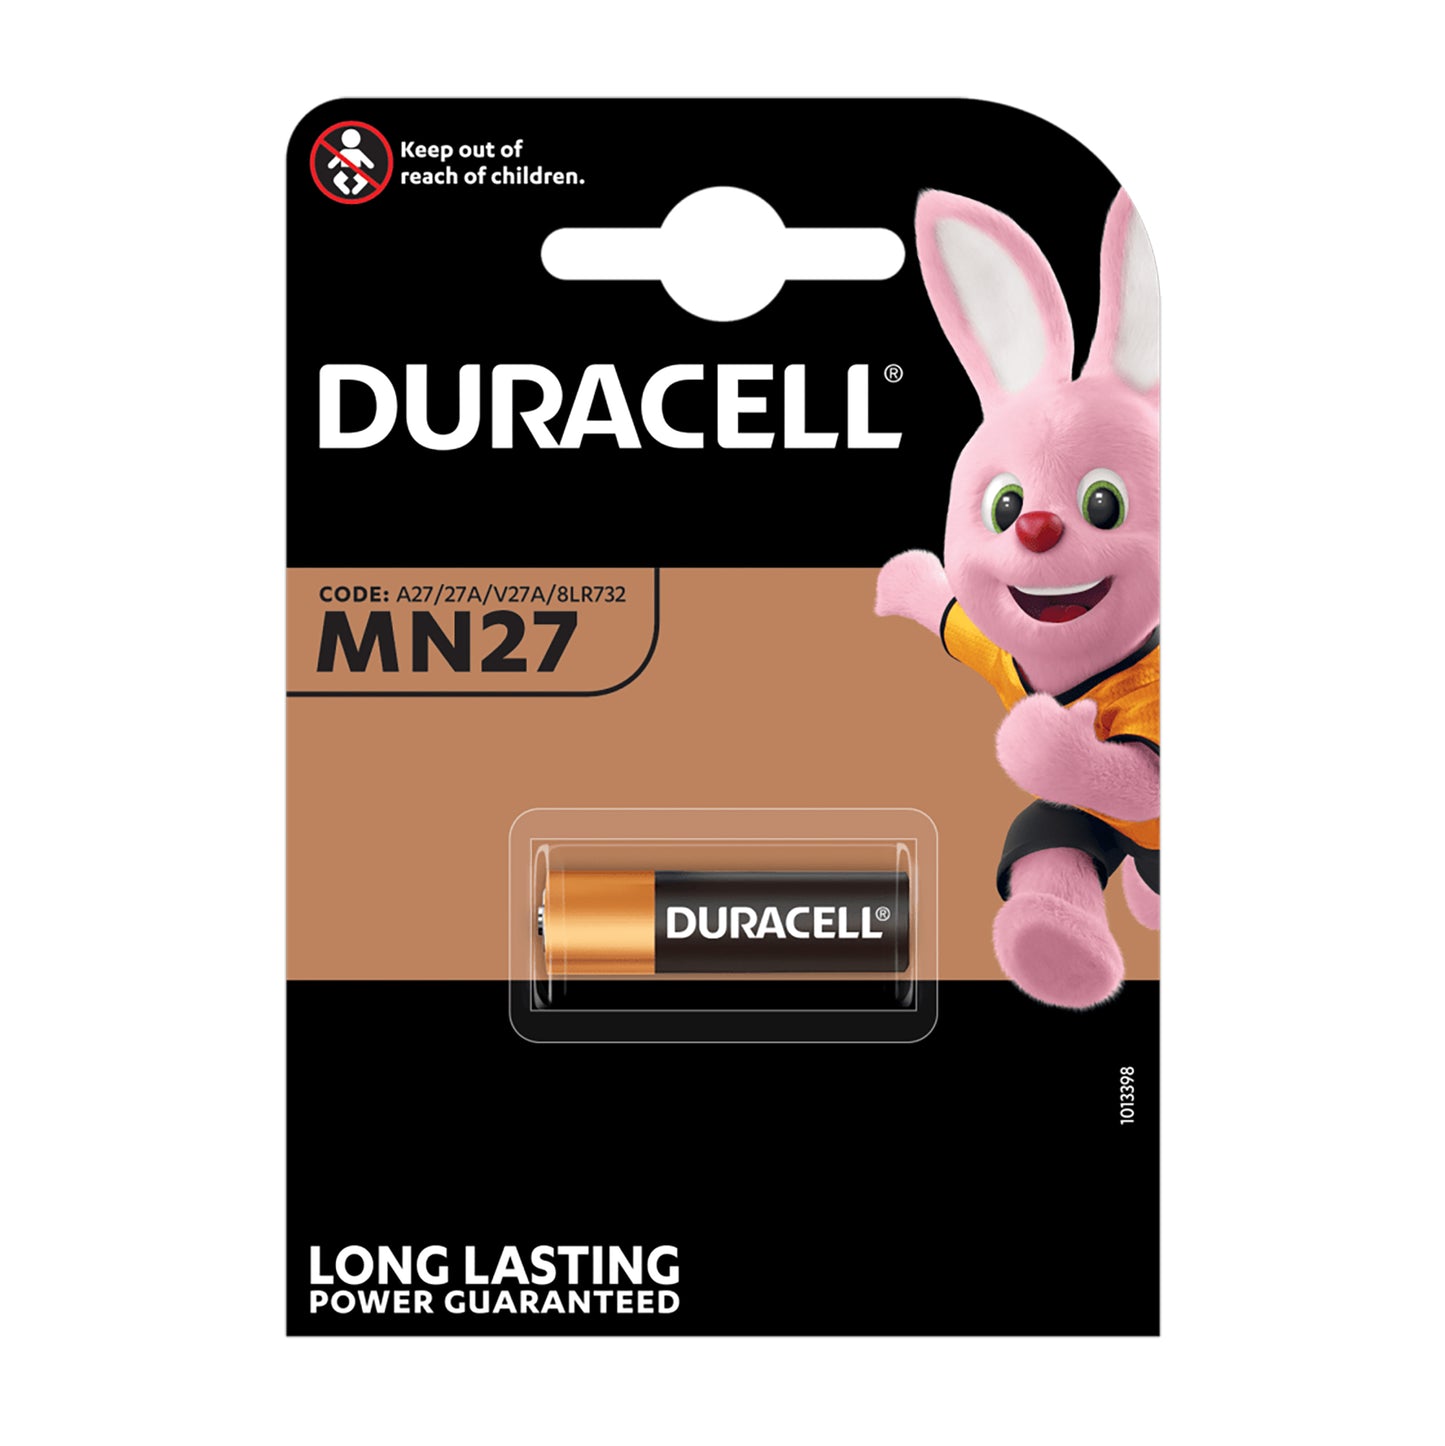 DCL-MN27-1 - батарейка Duracell MN27 для пульта автосигнализации, аналог: 27A, V27GA, 8LR732 (1 шт. в блистере)